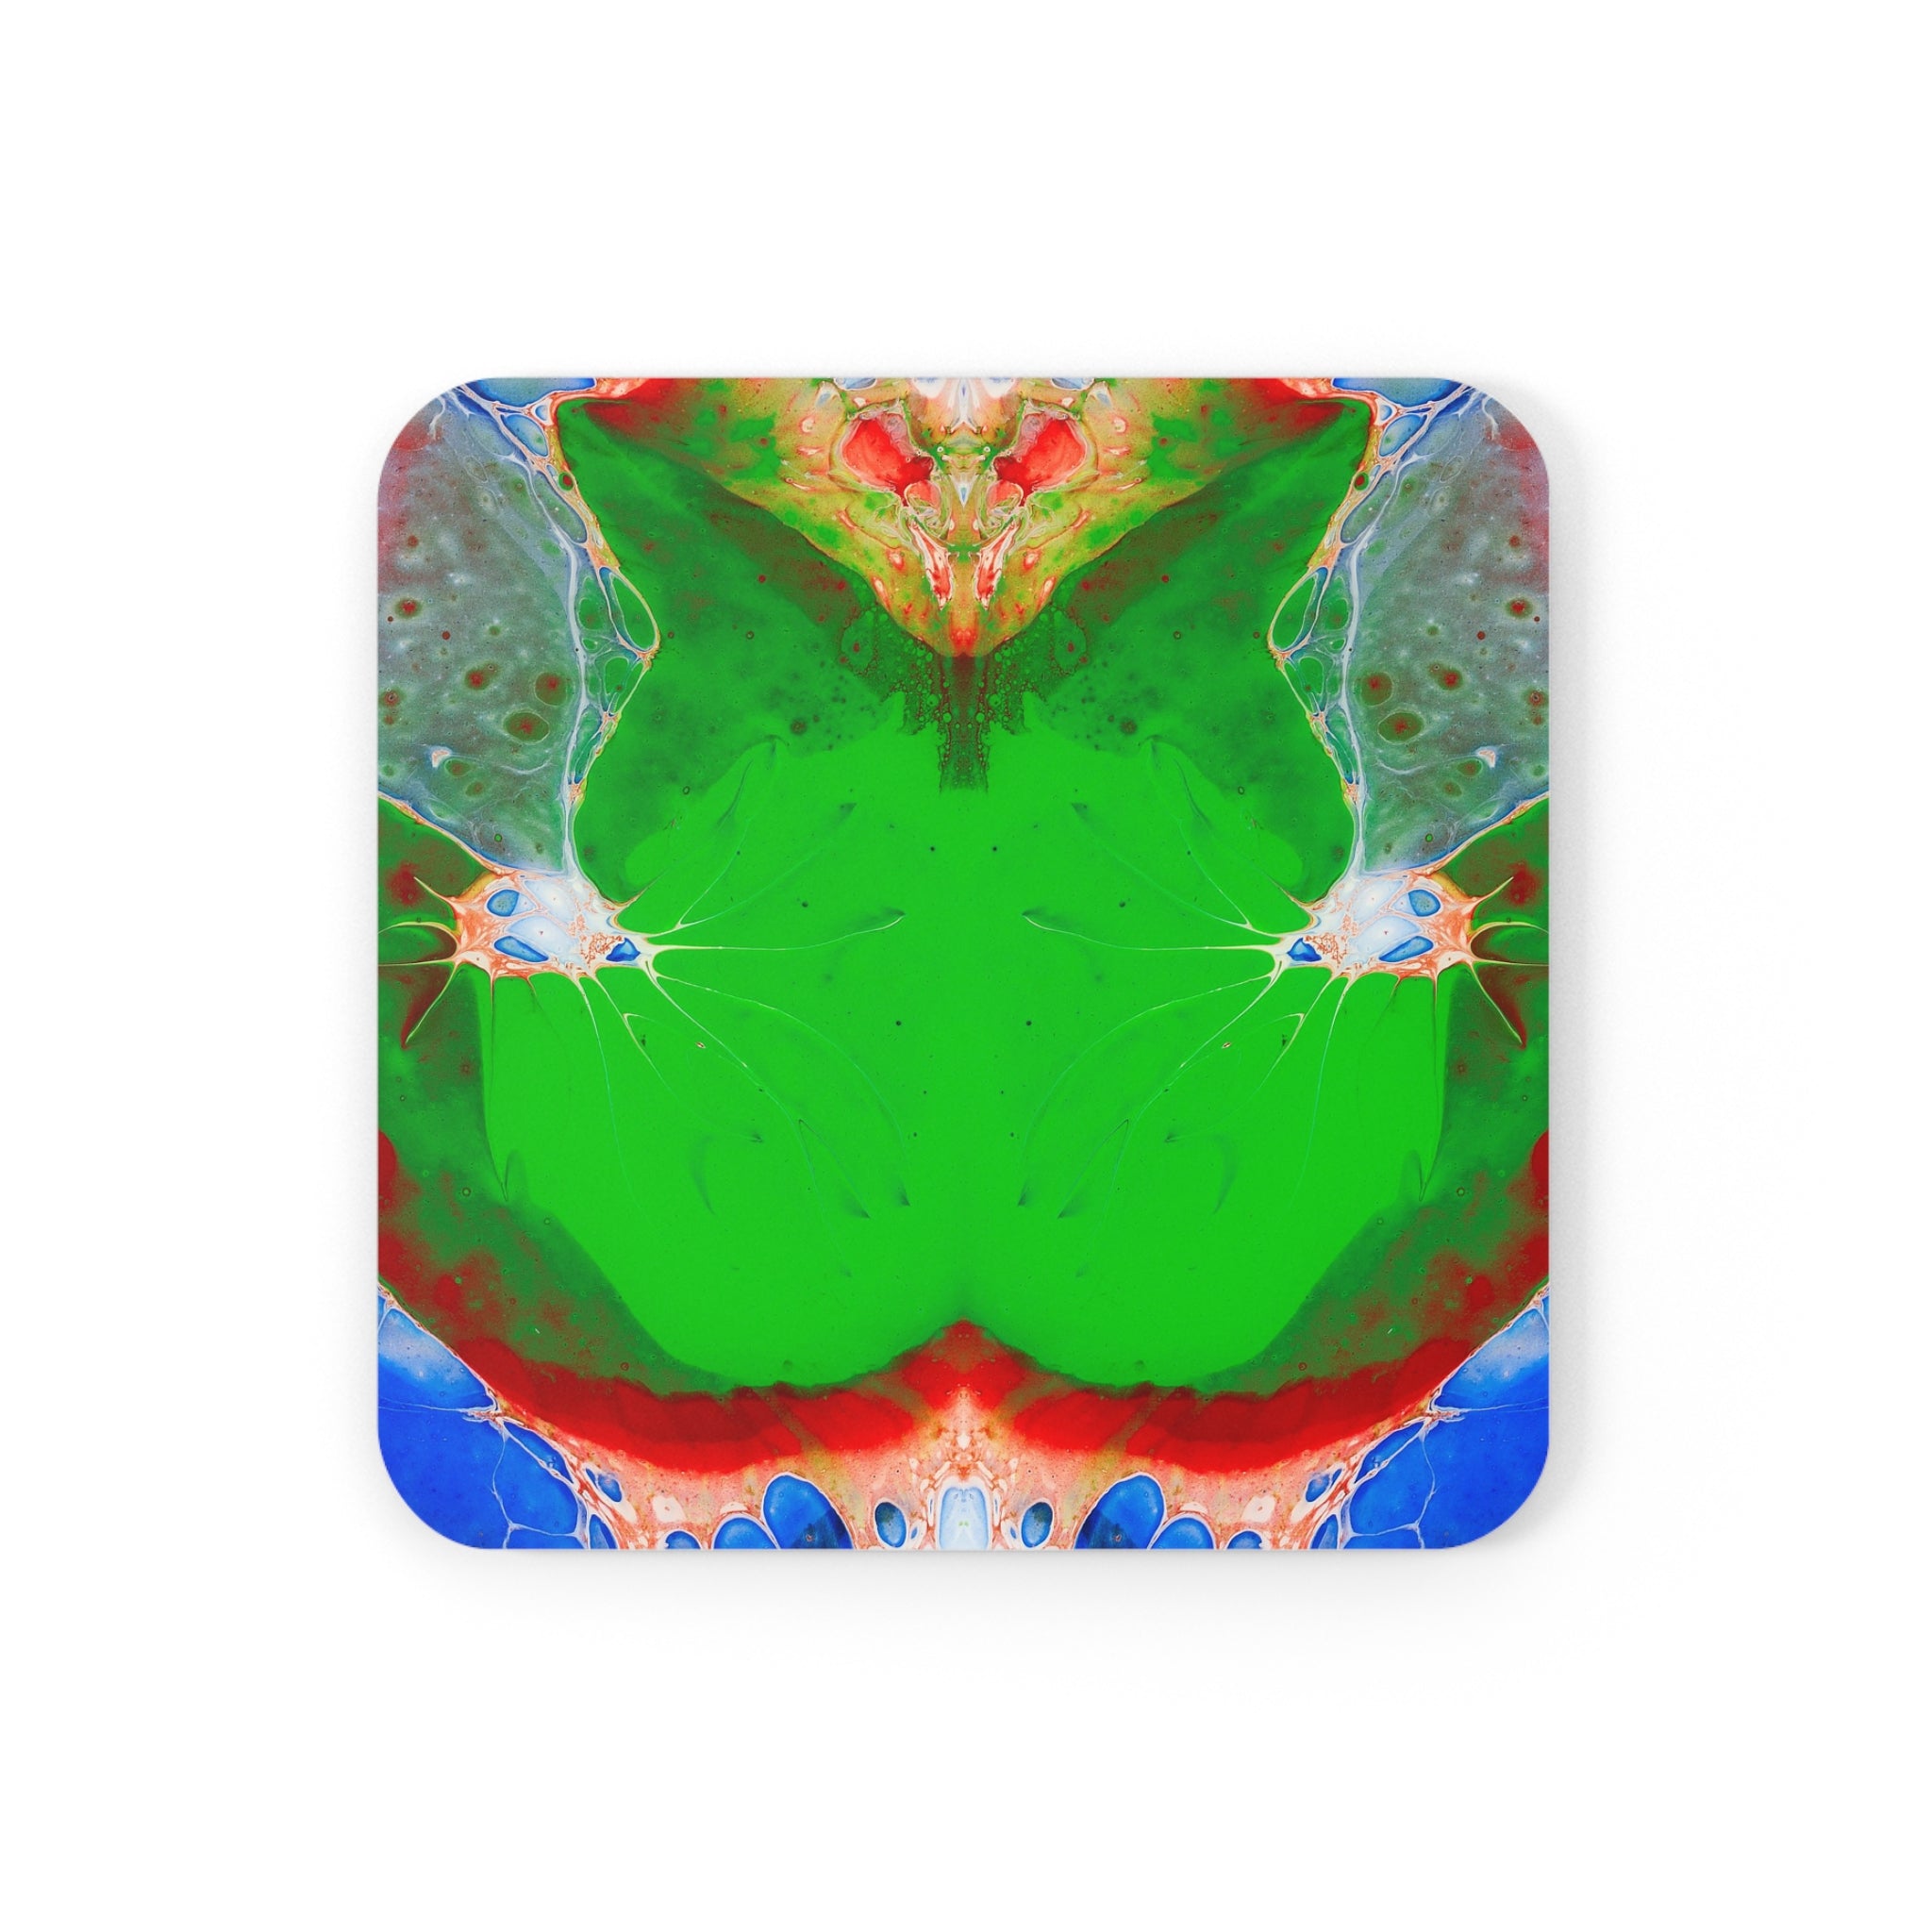 Cameron Creations - Green Goo - Stylish Coffee Coaster - Square Front